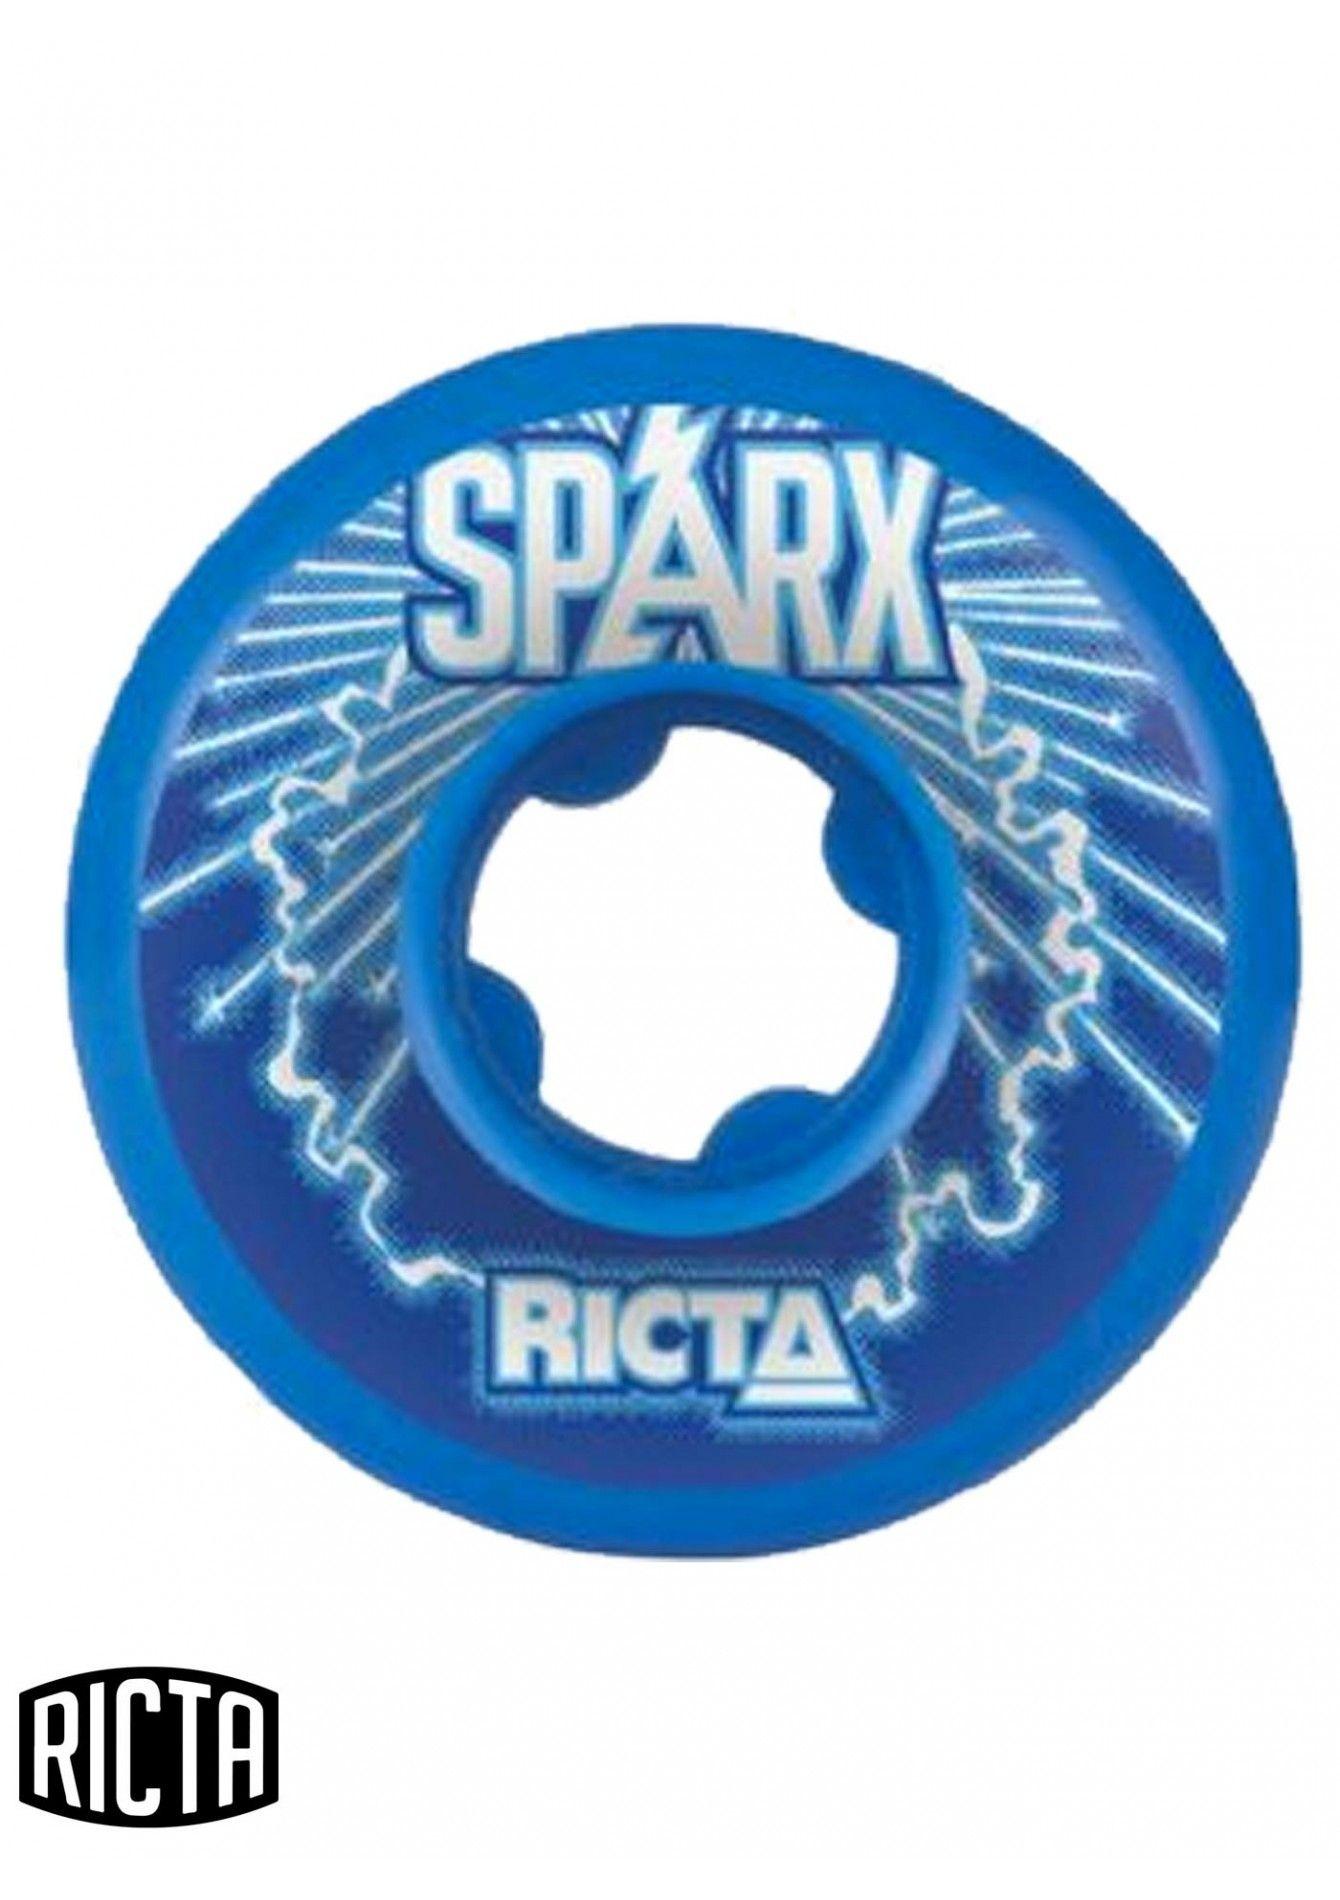 Ricta Logo - RICTA SPARX SHOCK WAVES BLUE 54MM